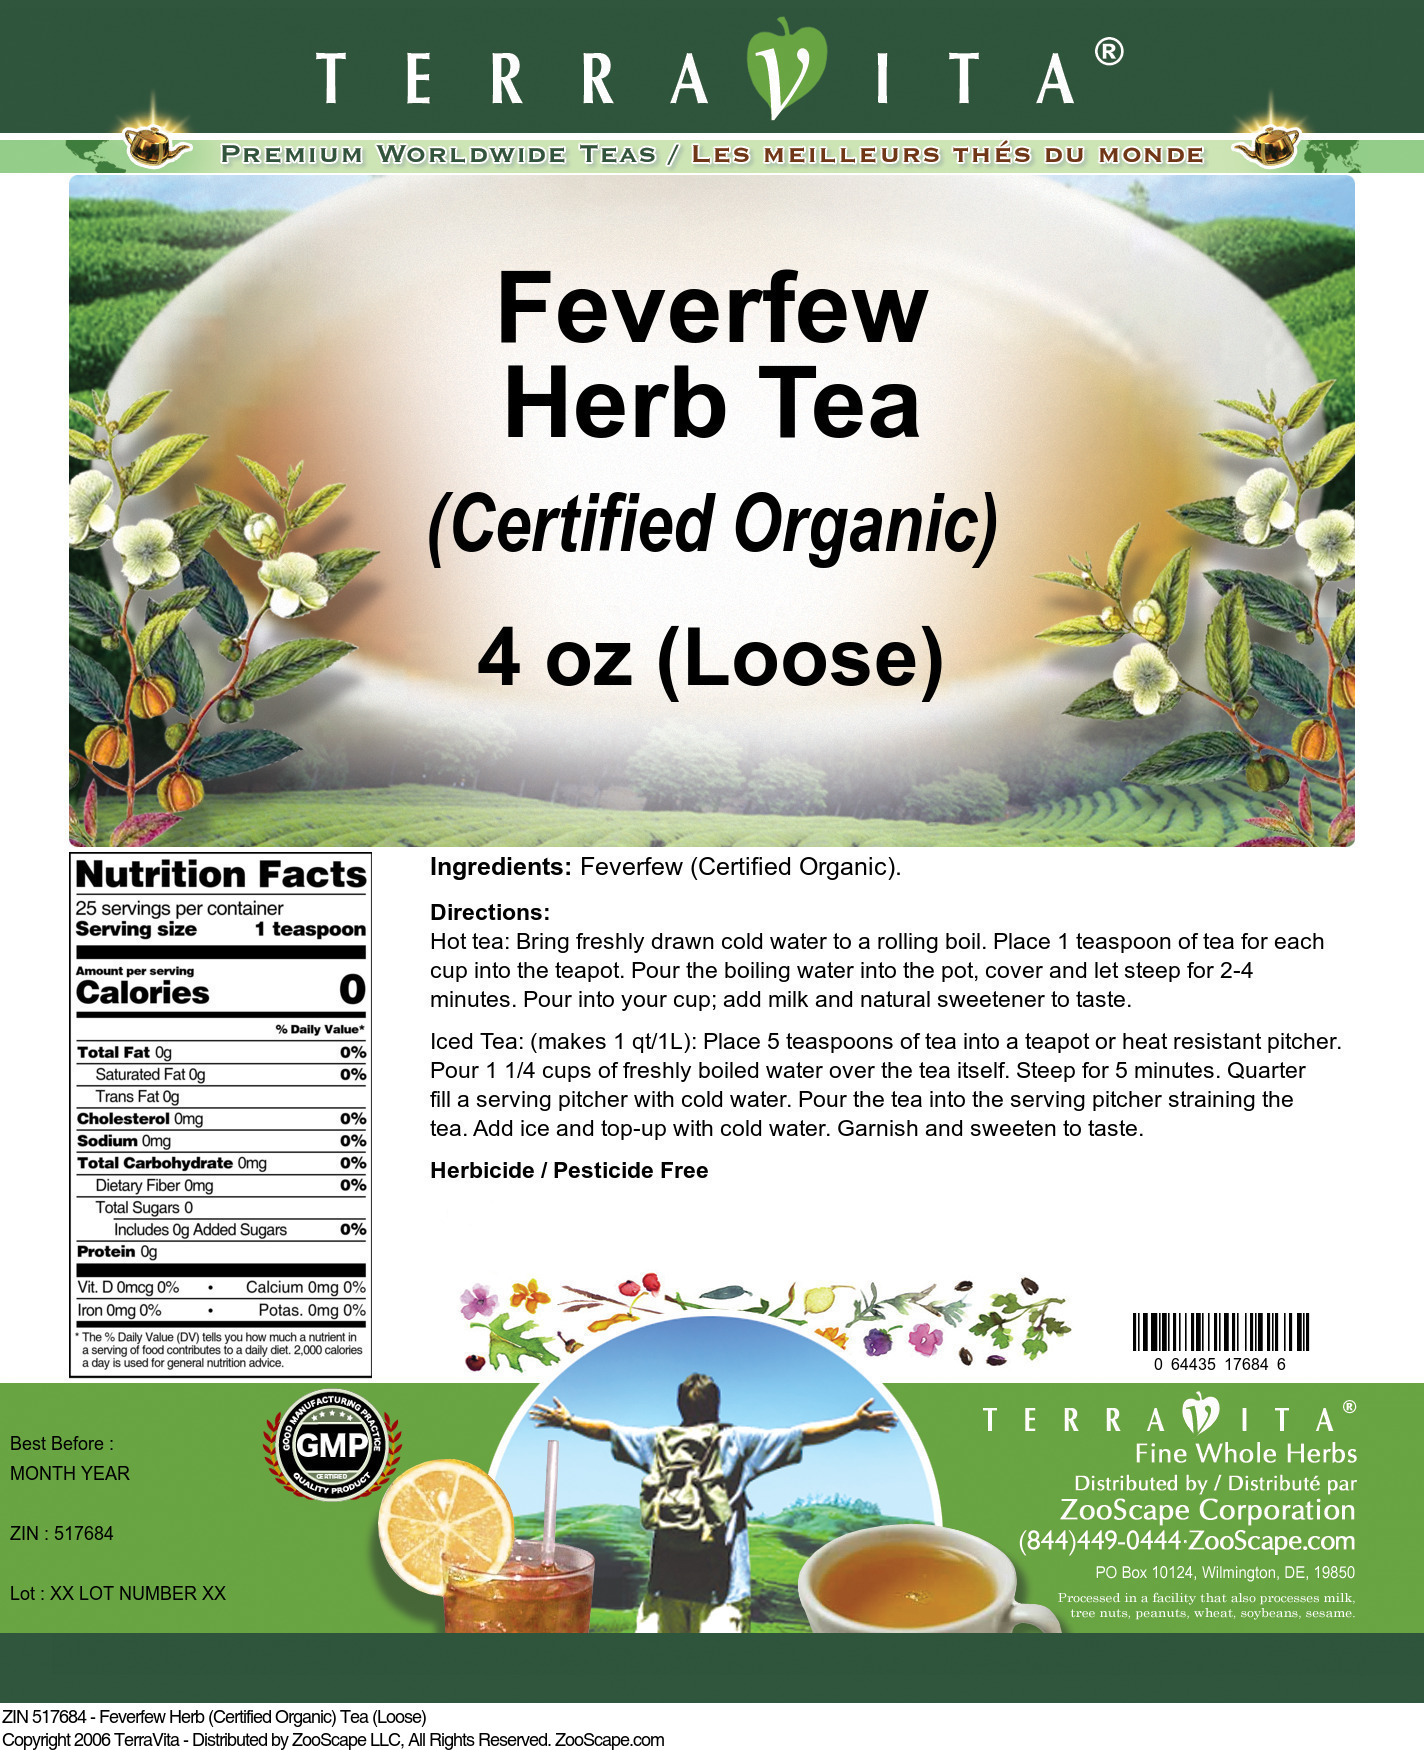 Feverfew Herb (Certified Organic) Tea (Loose) - Label